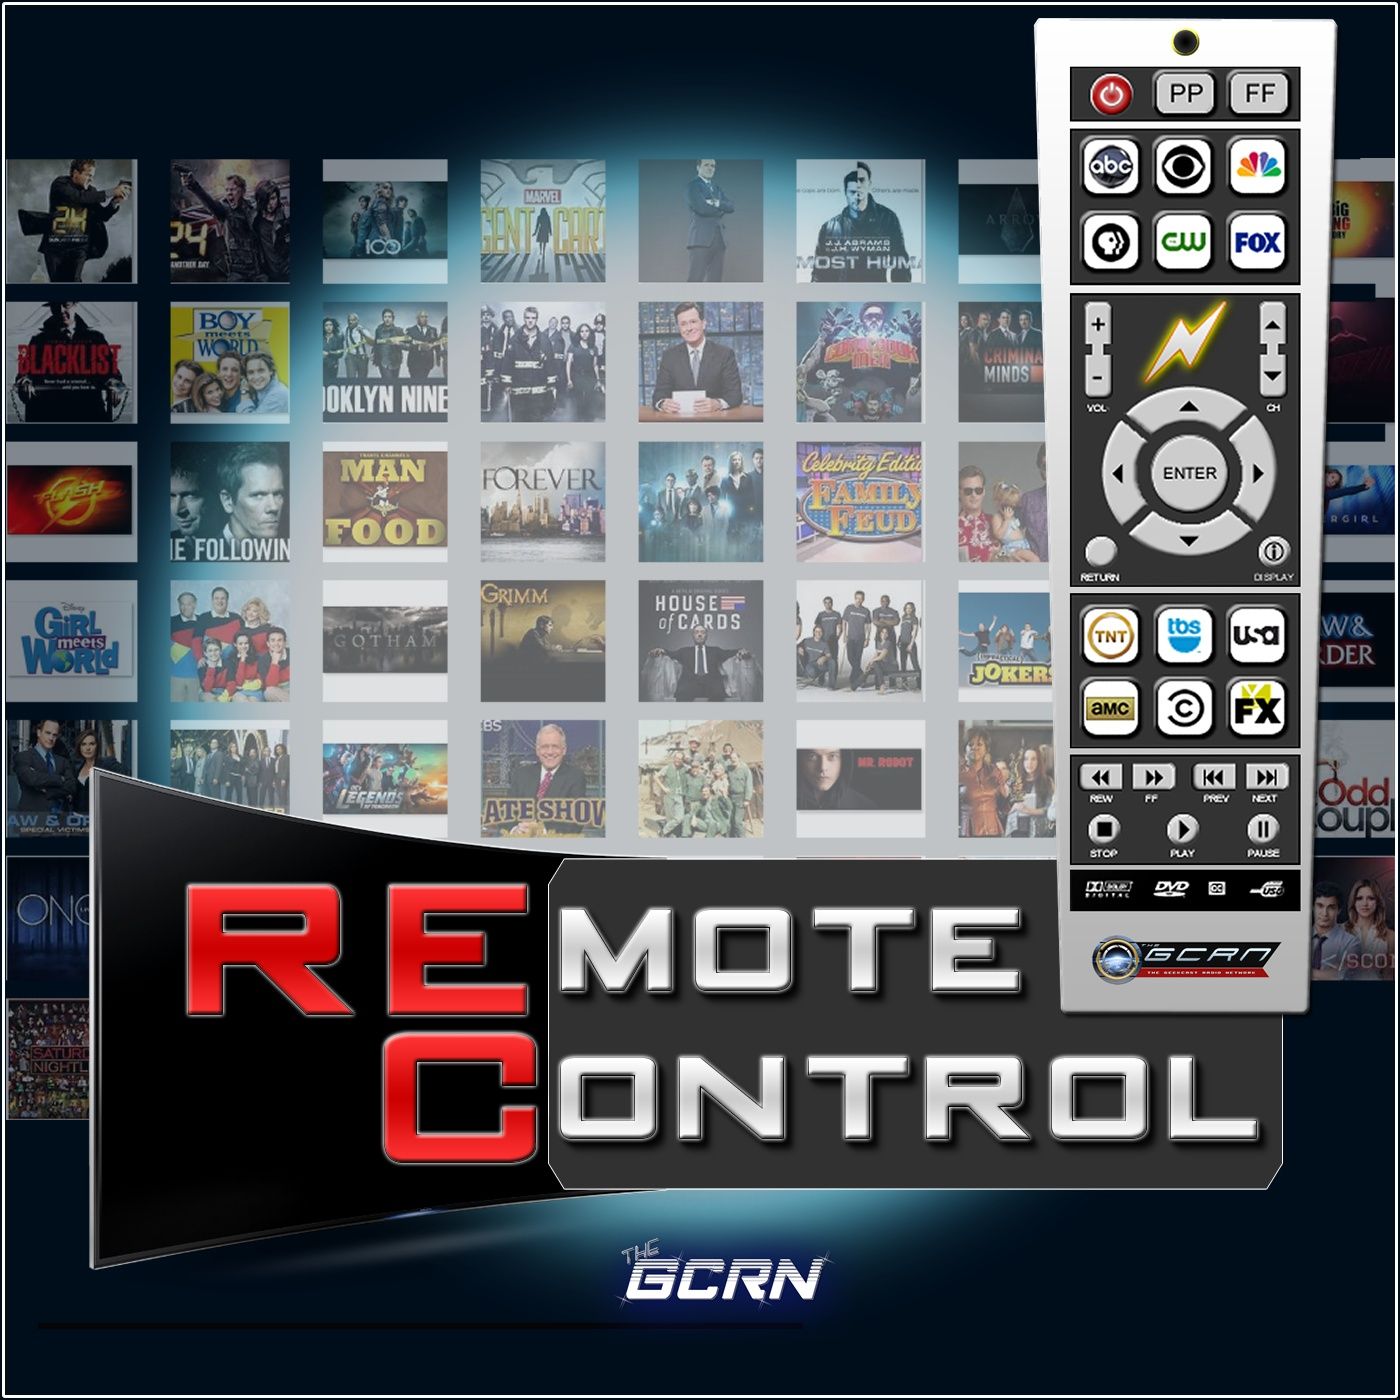 Remote Control – Pilot Premiere – The Flash